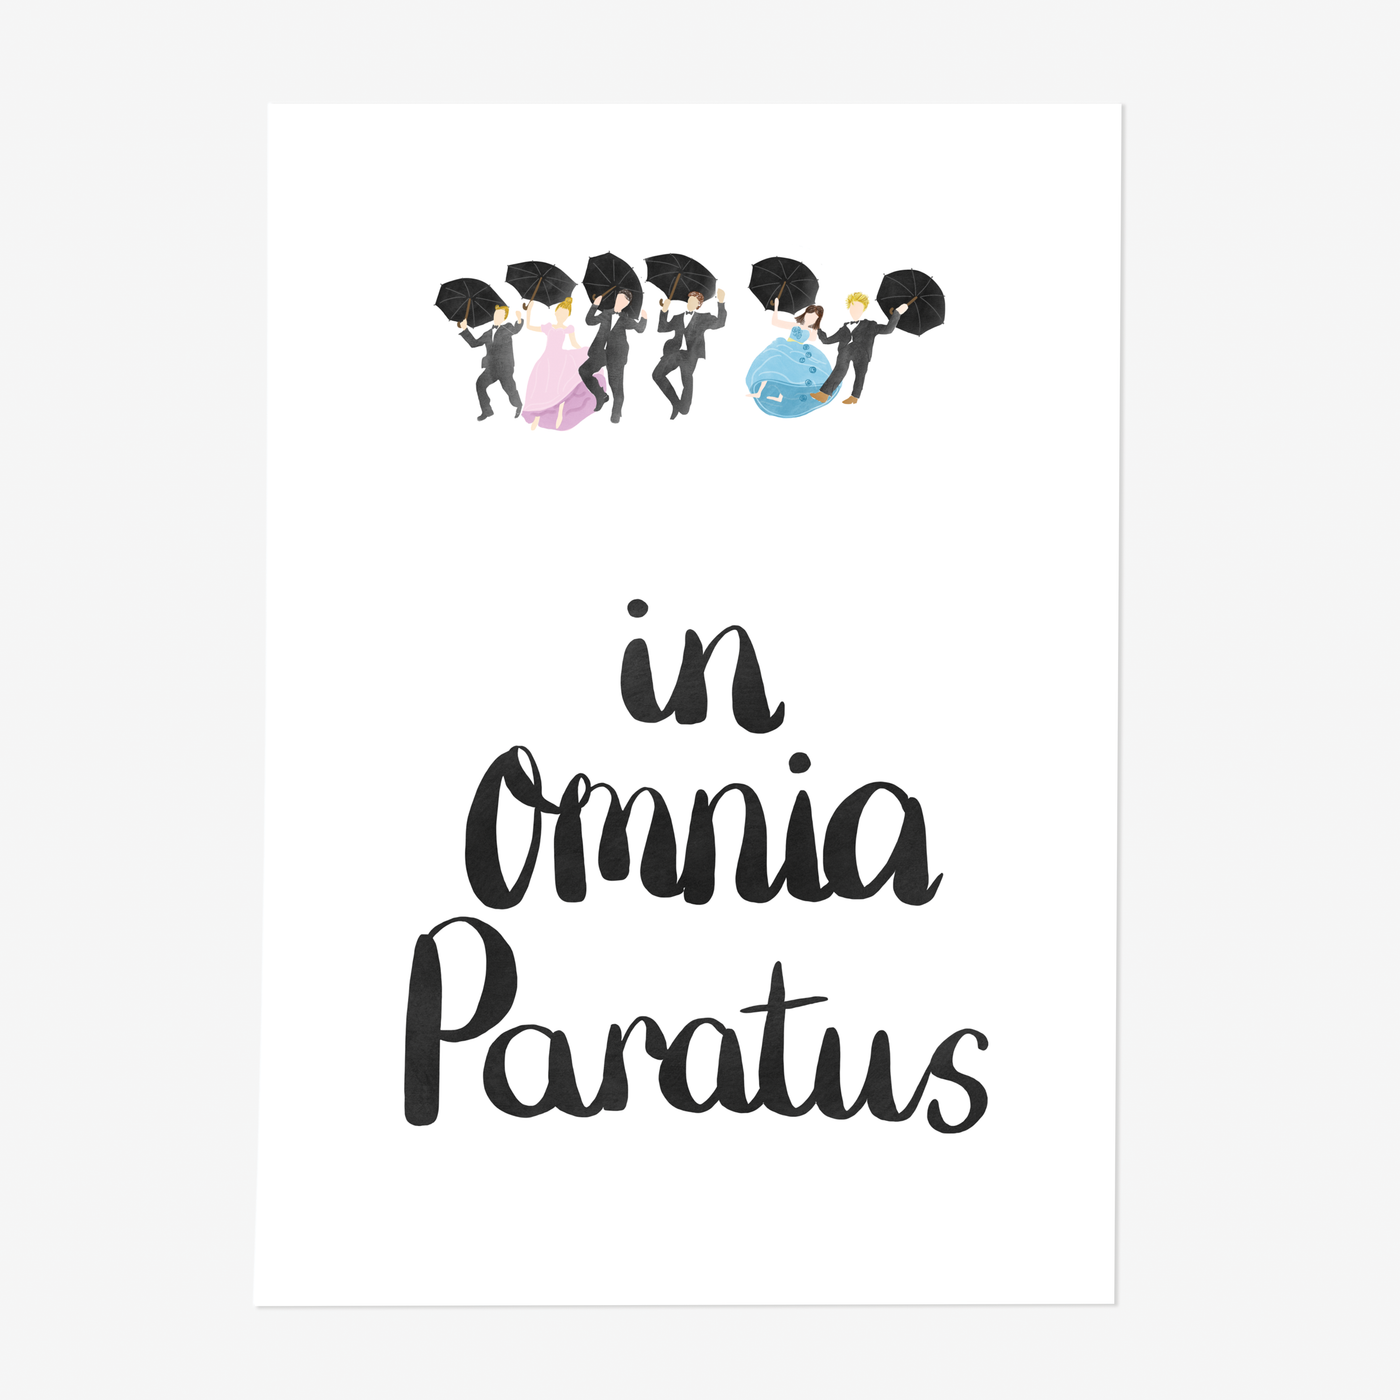 In Omnia Paratus Gilmore Girls Art Print - Poppins & Co.